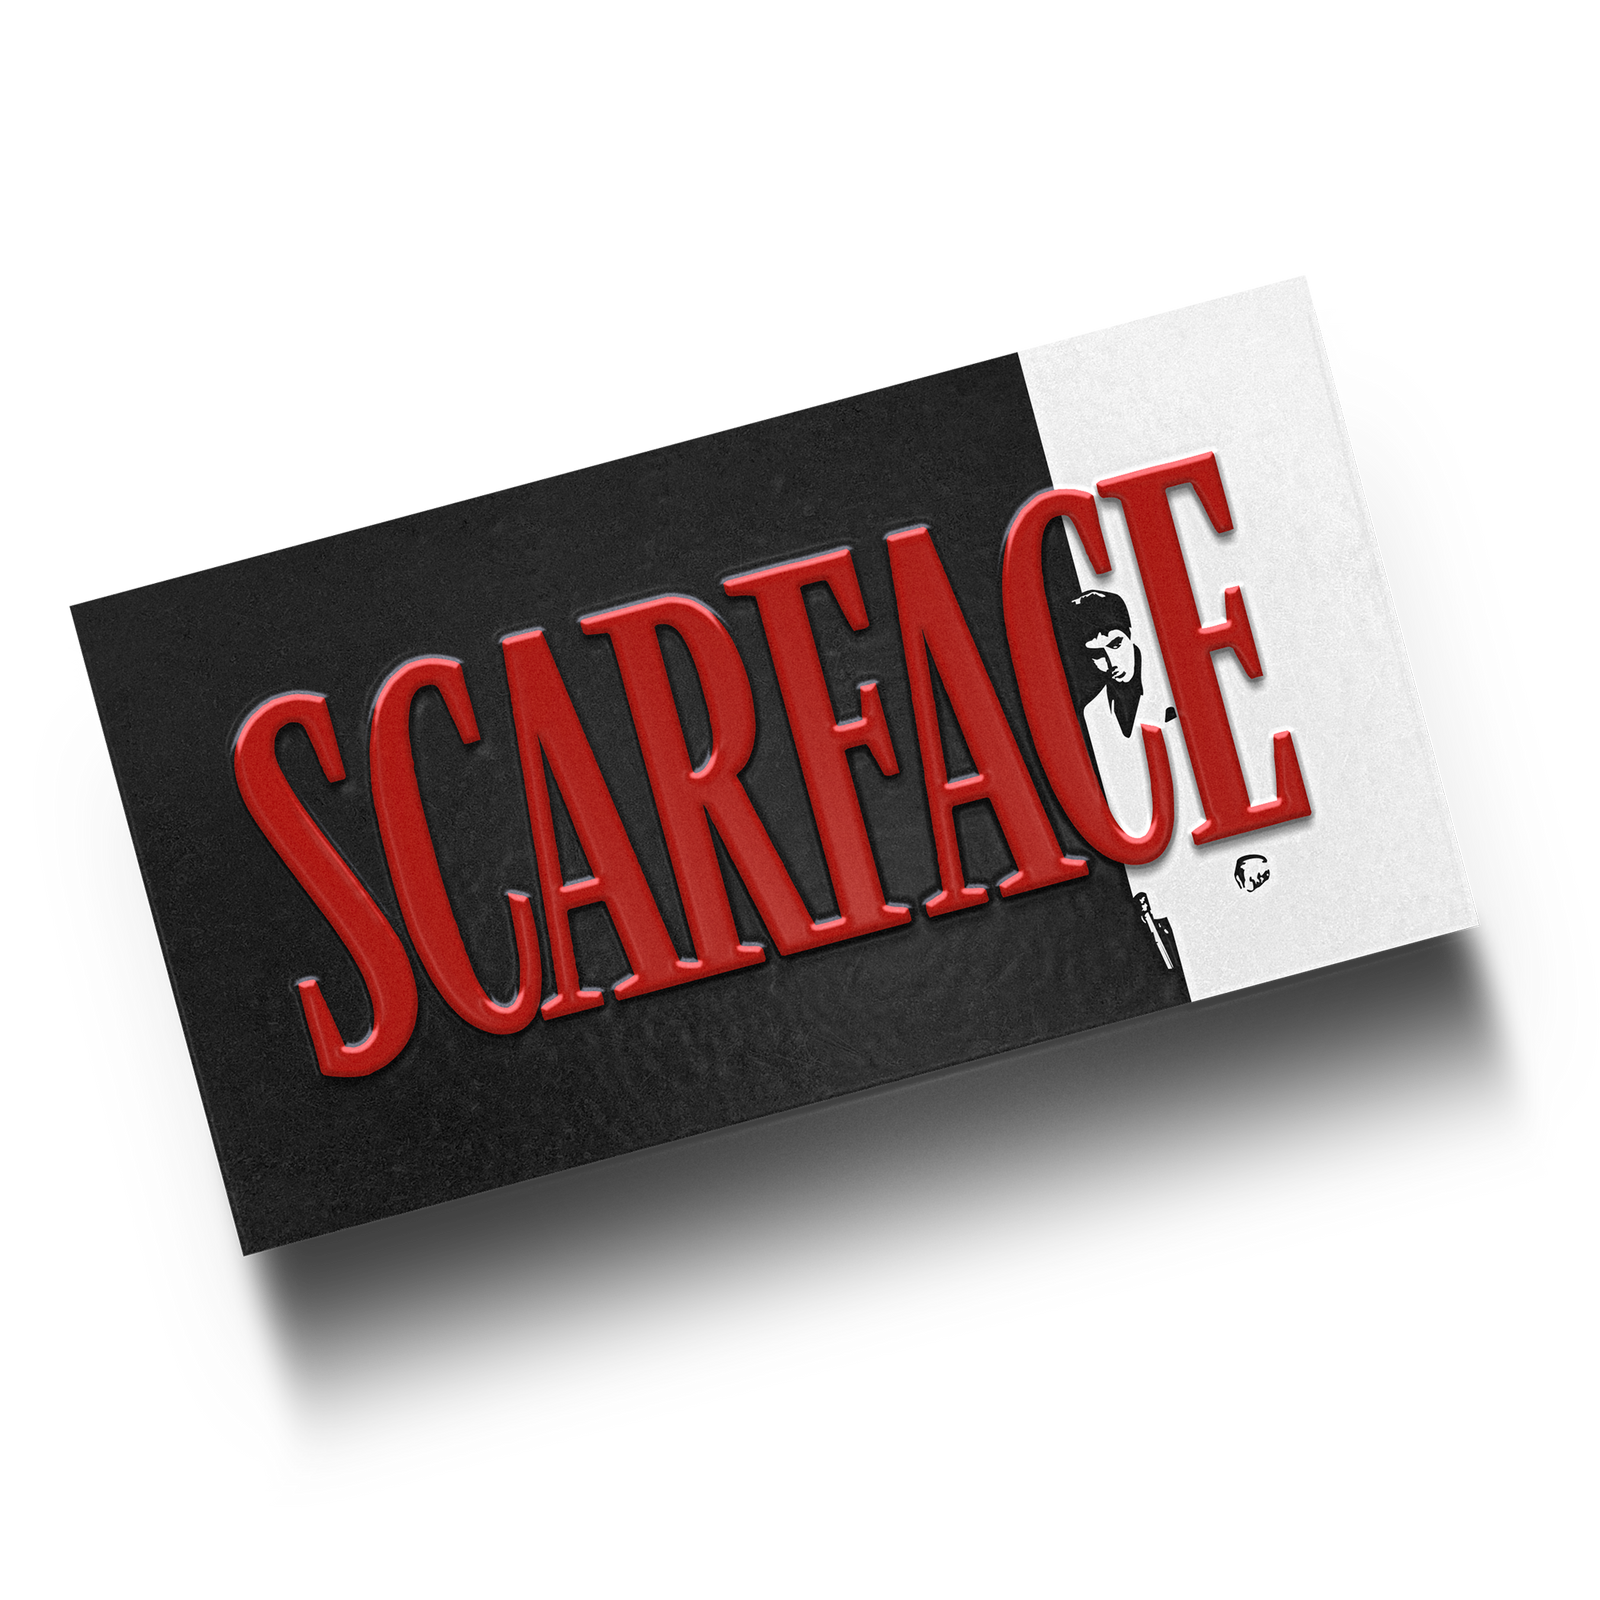 Scarface logo.